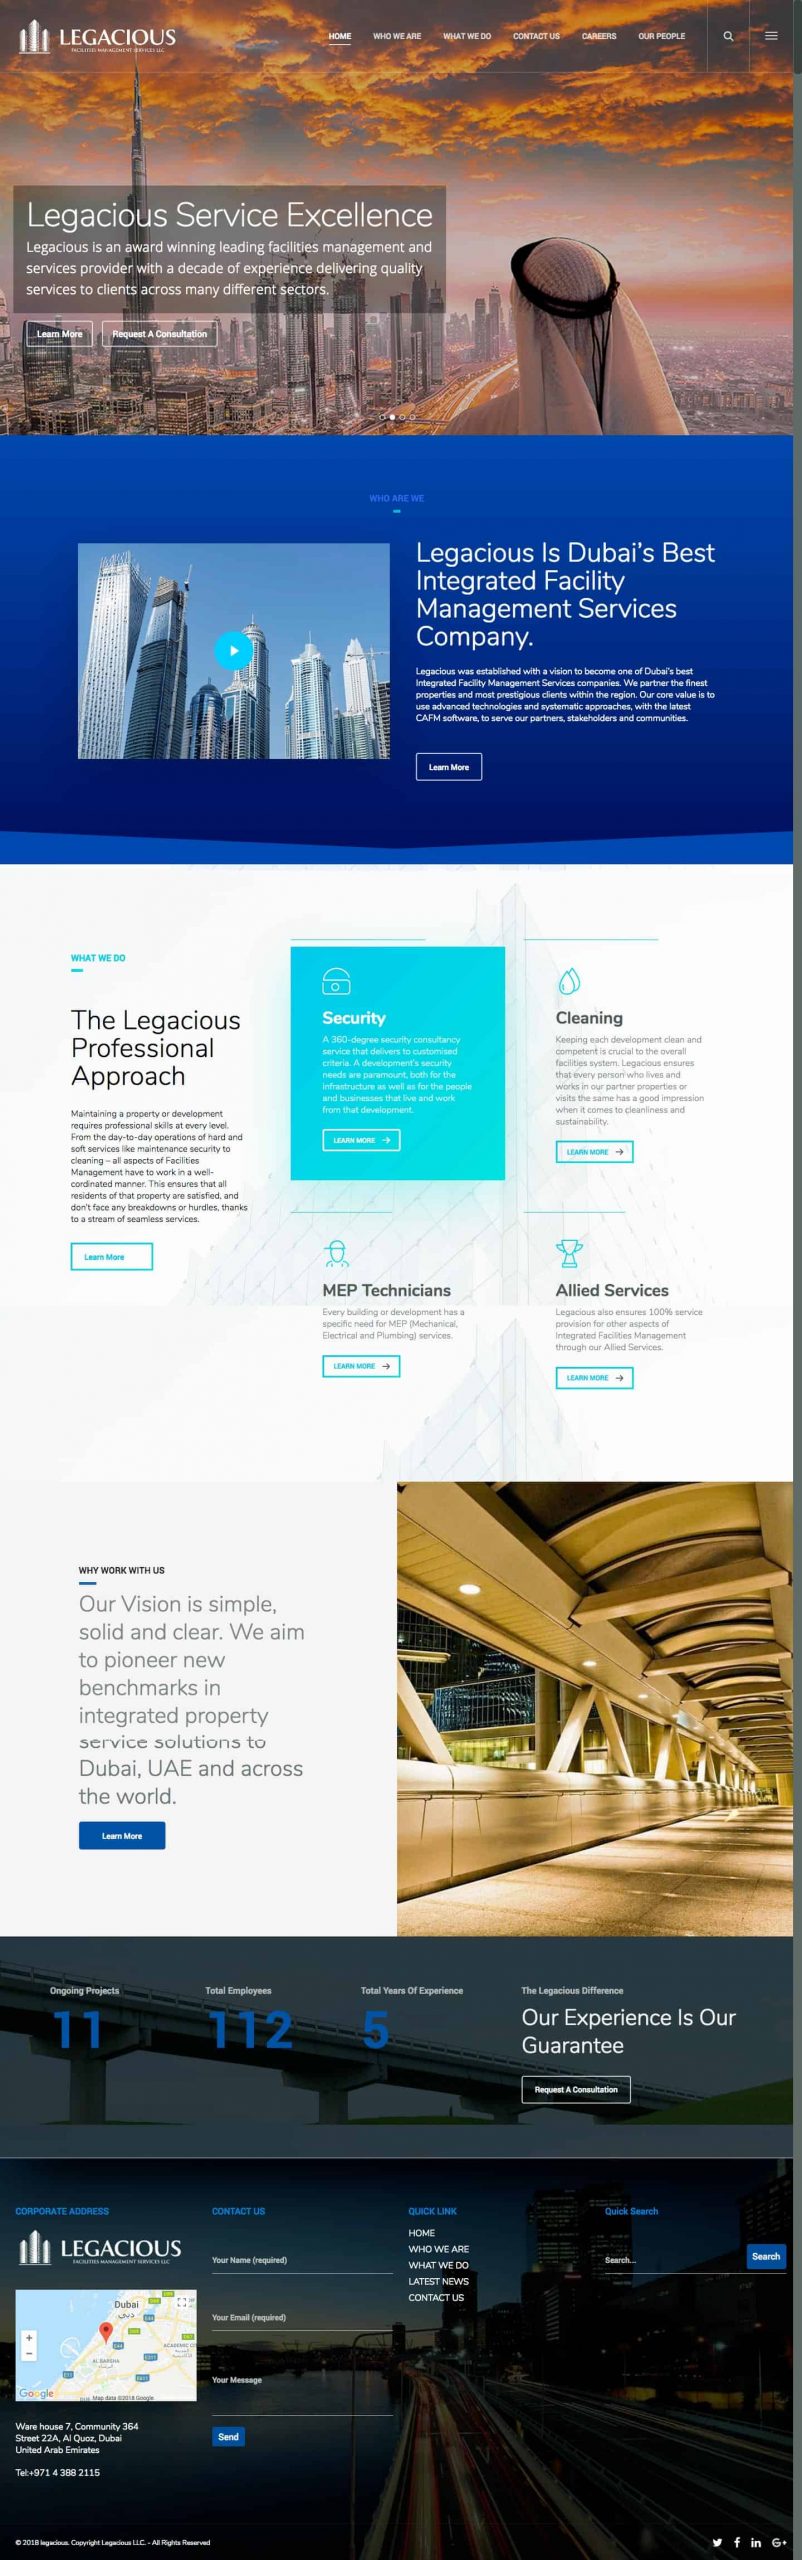 legacious website design